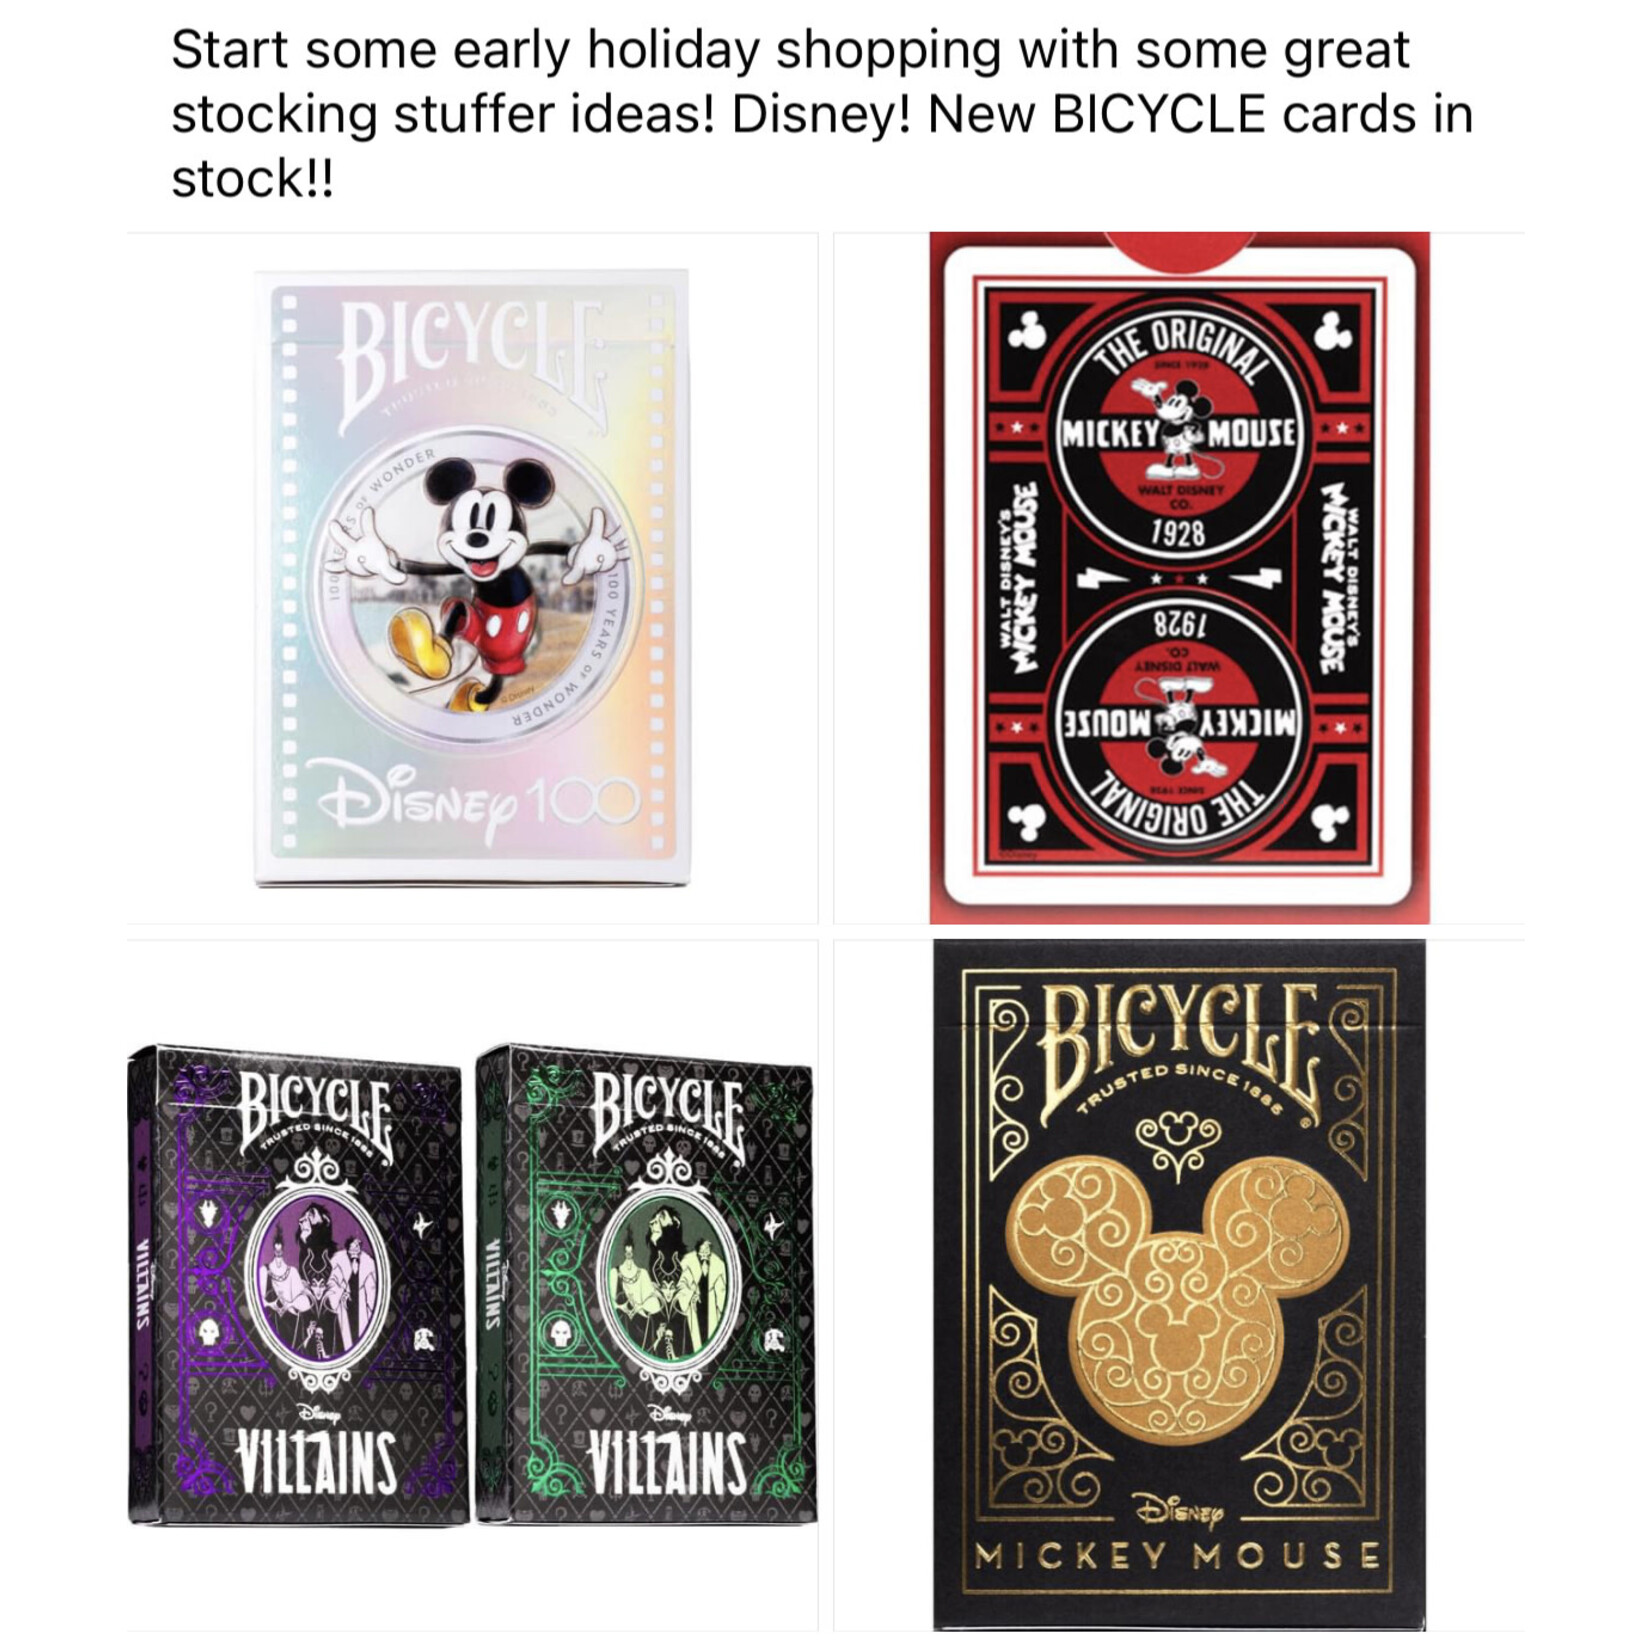 Disney bicycle cards